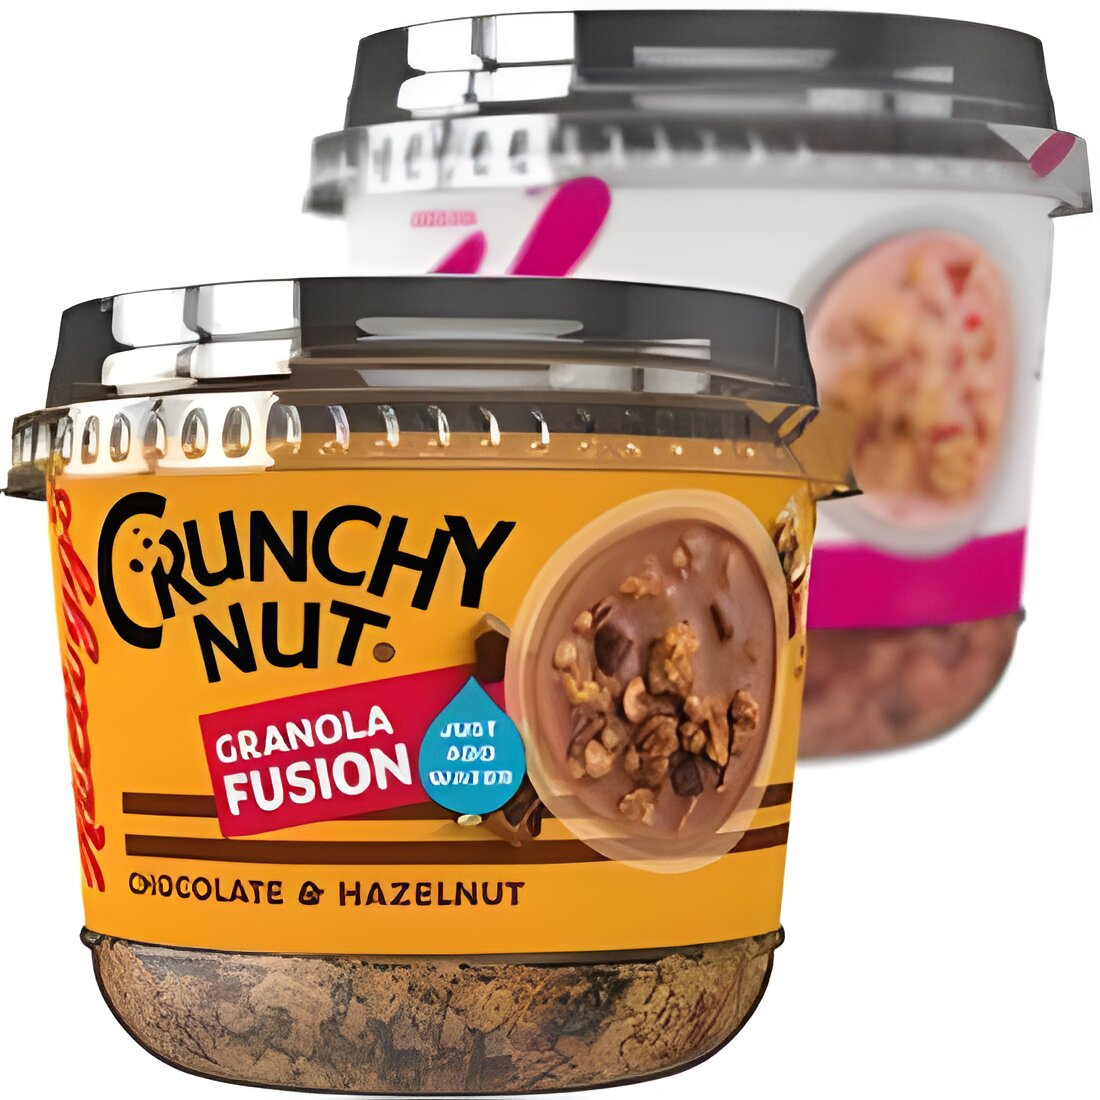 Free Kellogg's Crunchy Nut Granola Fusion Choc & Hazelnut